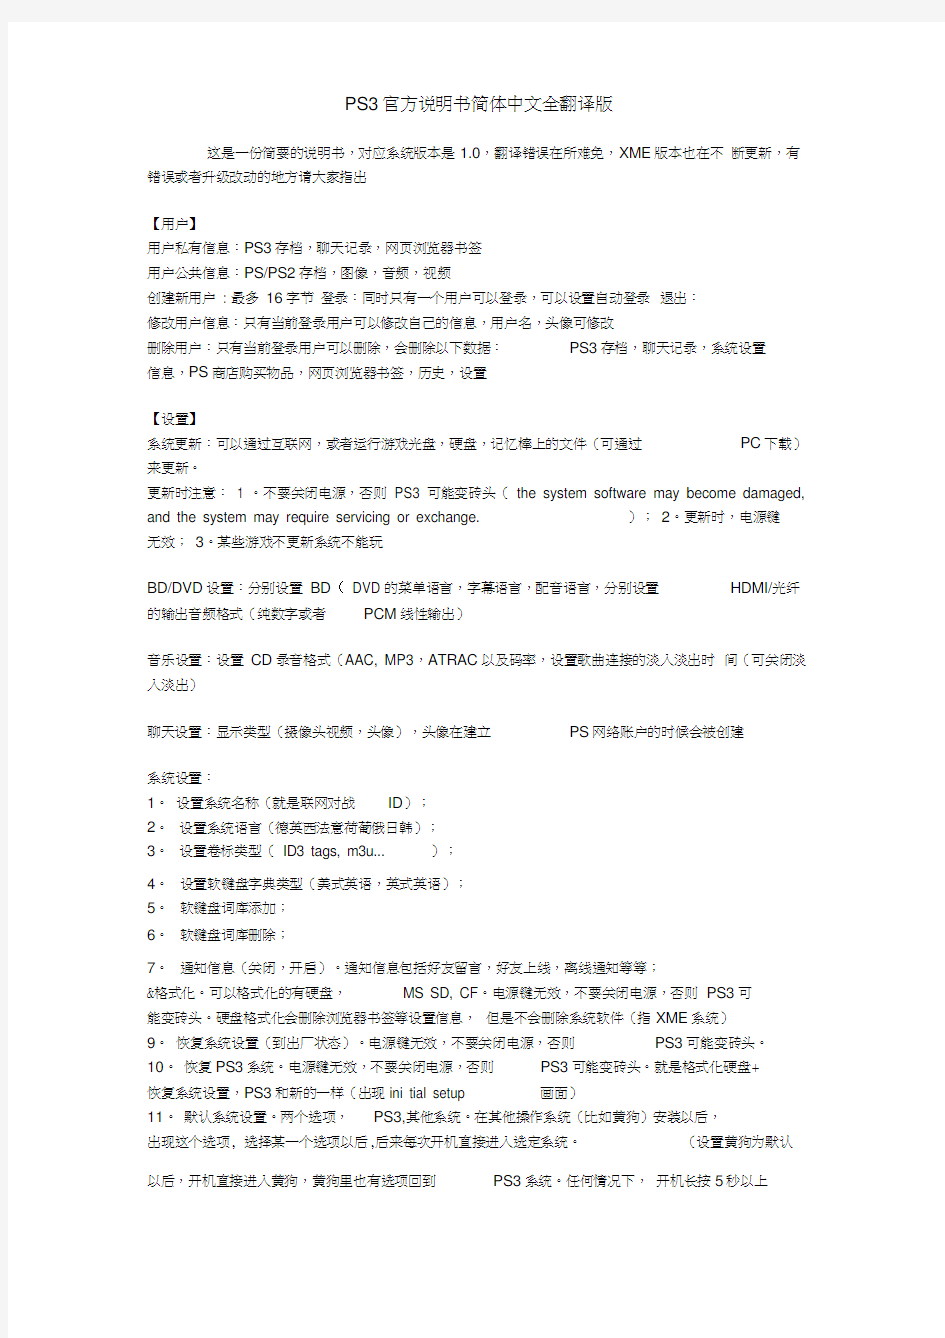 PS3官方说明书简体中文全翻译版